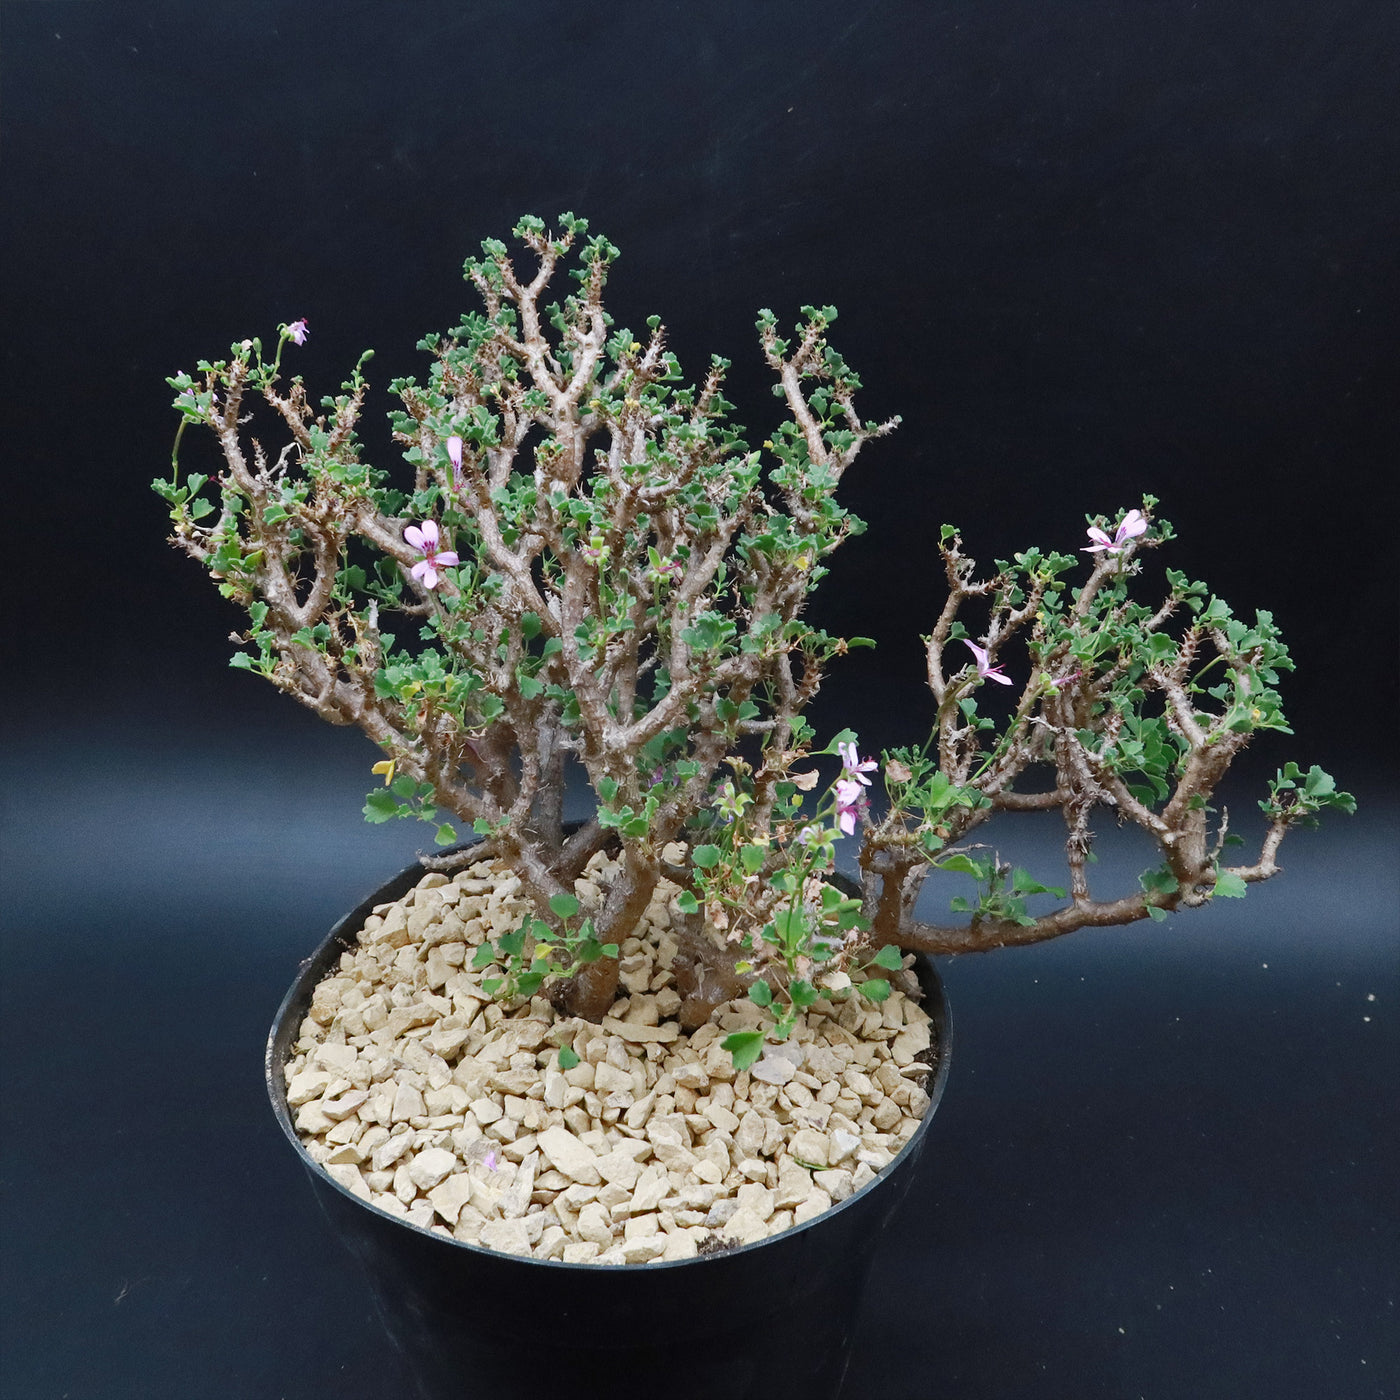 Pelargonium xerophyton